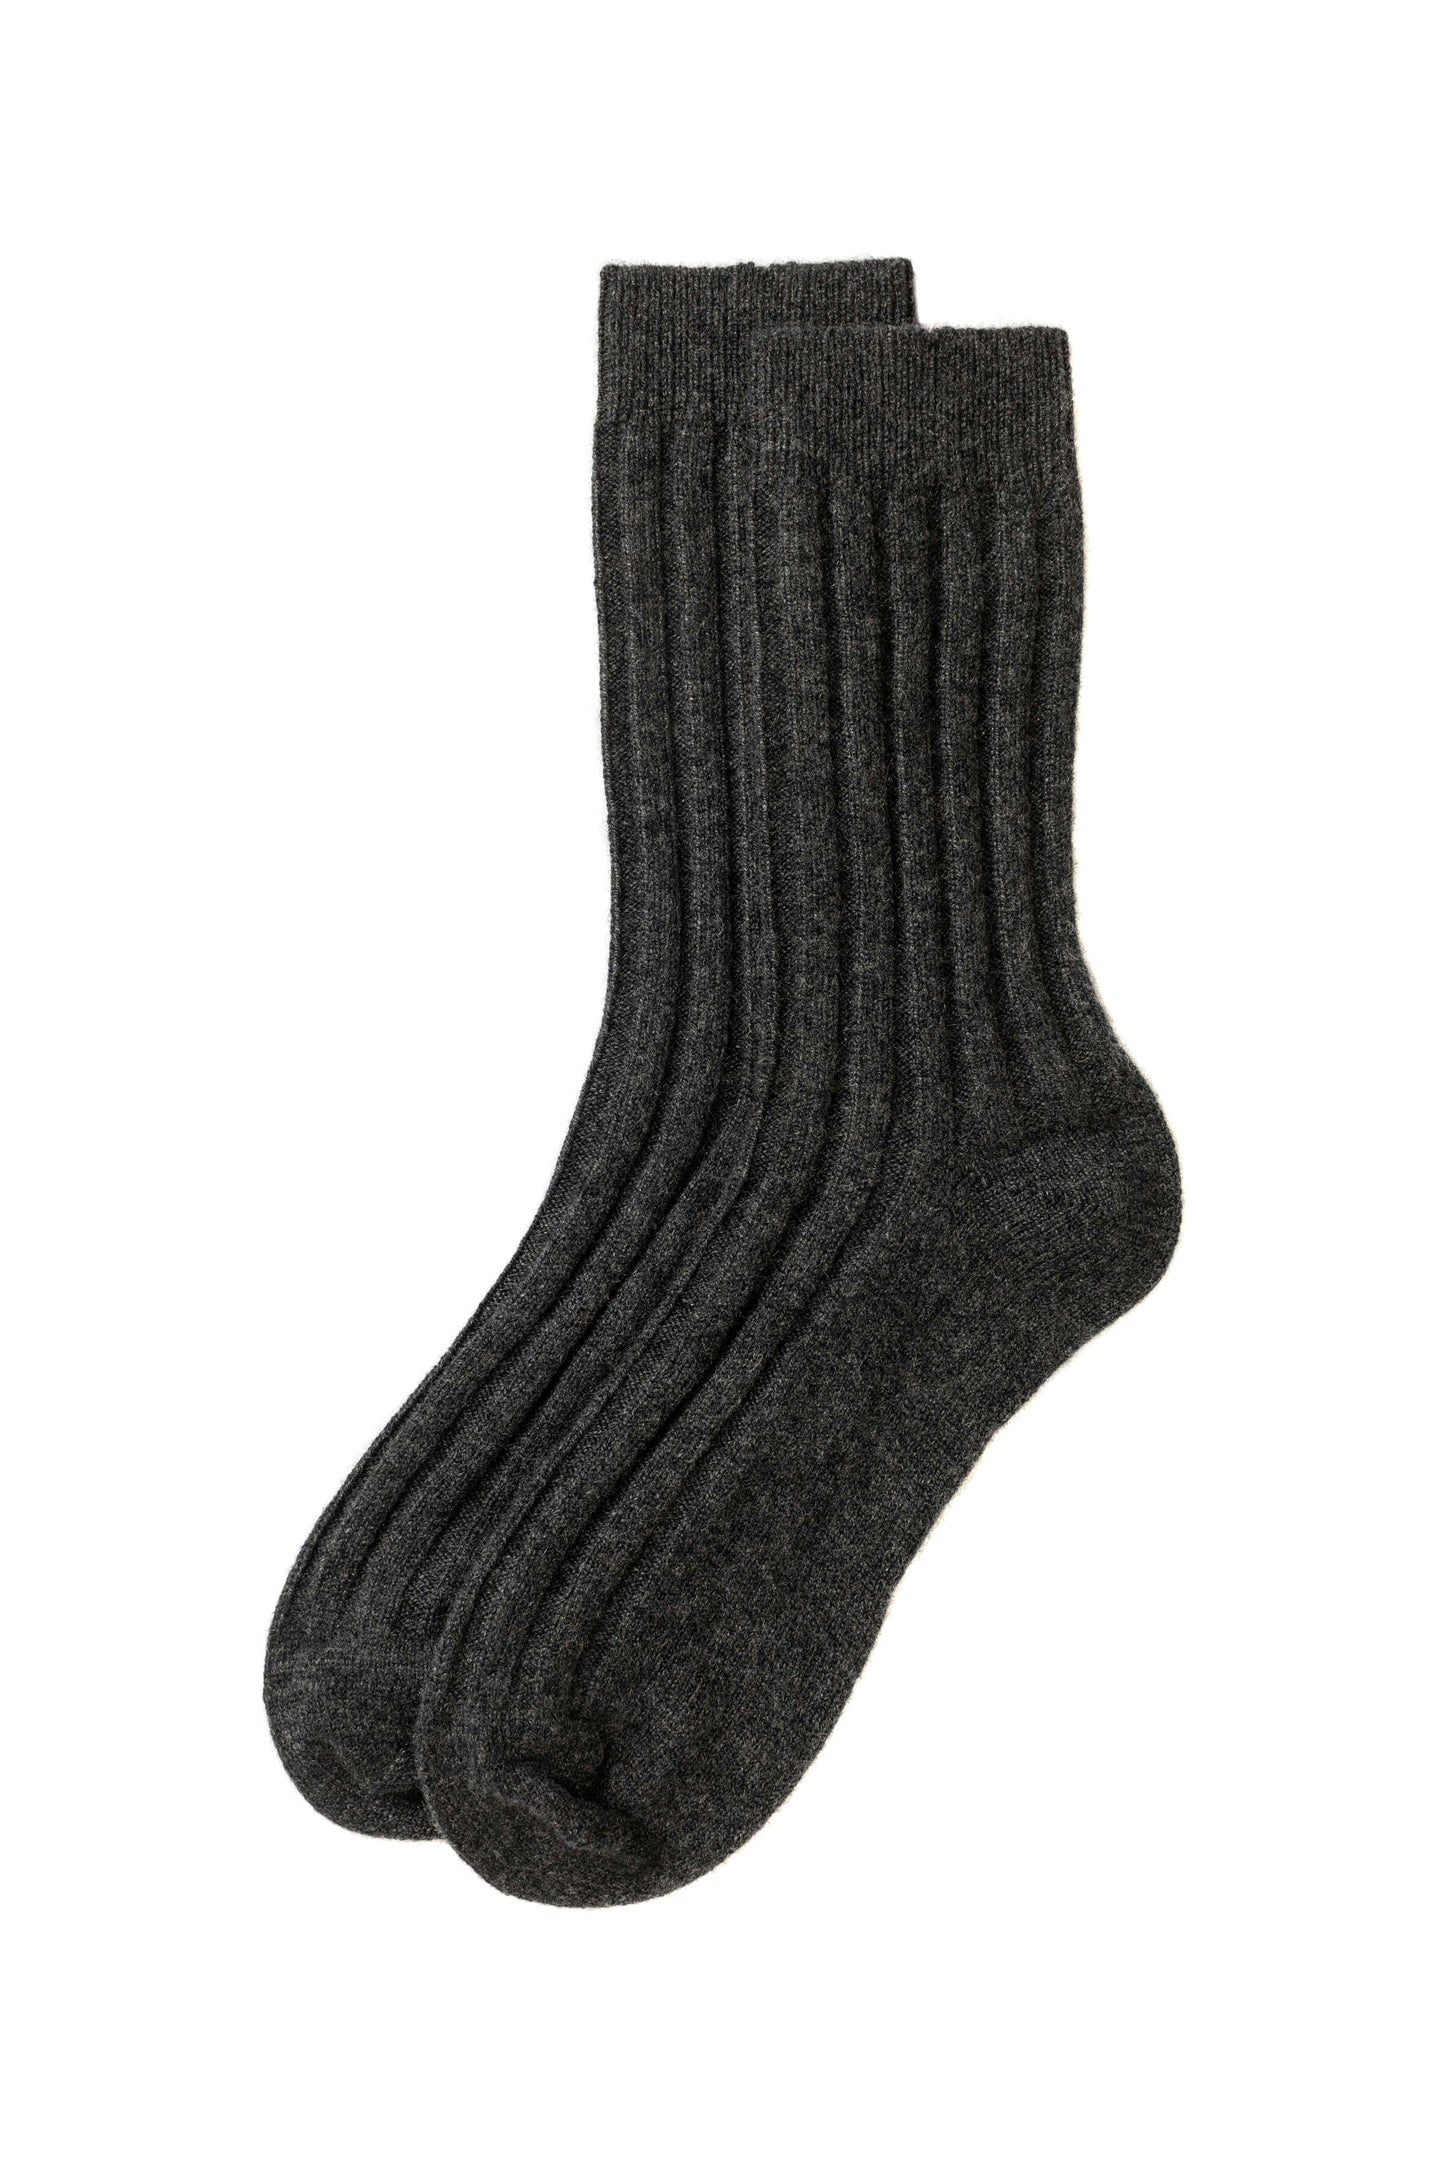 Johnstons of Elgin Men's Cashmere Bed Sock in Dark grey HAG02814HA41687-12